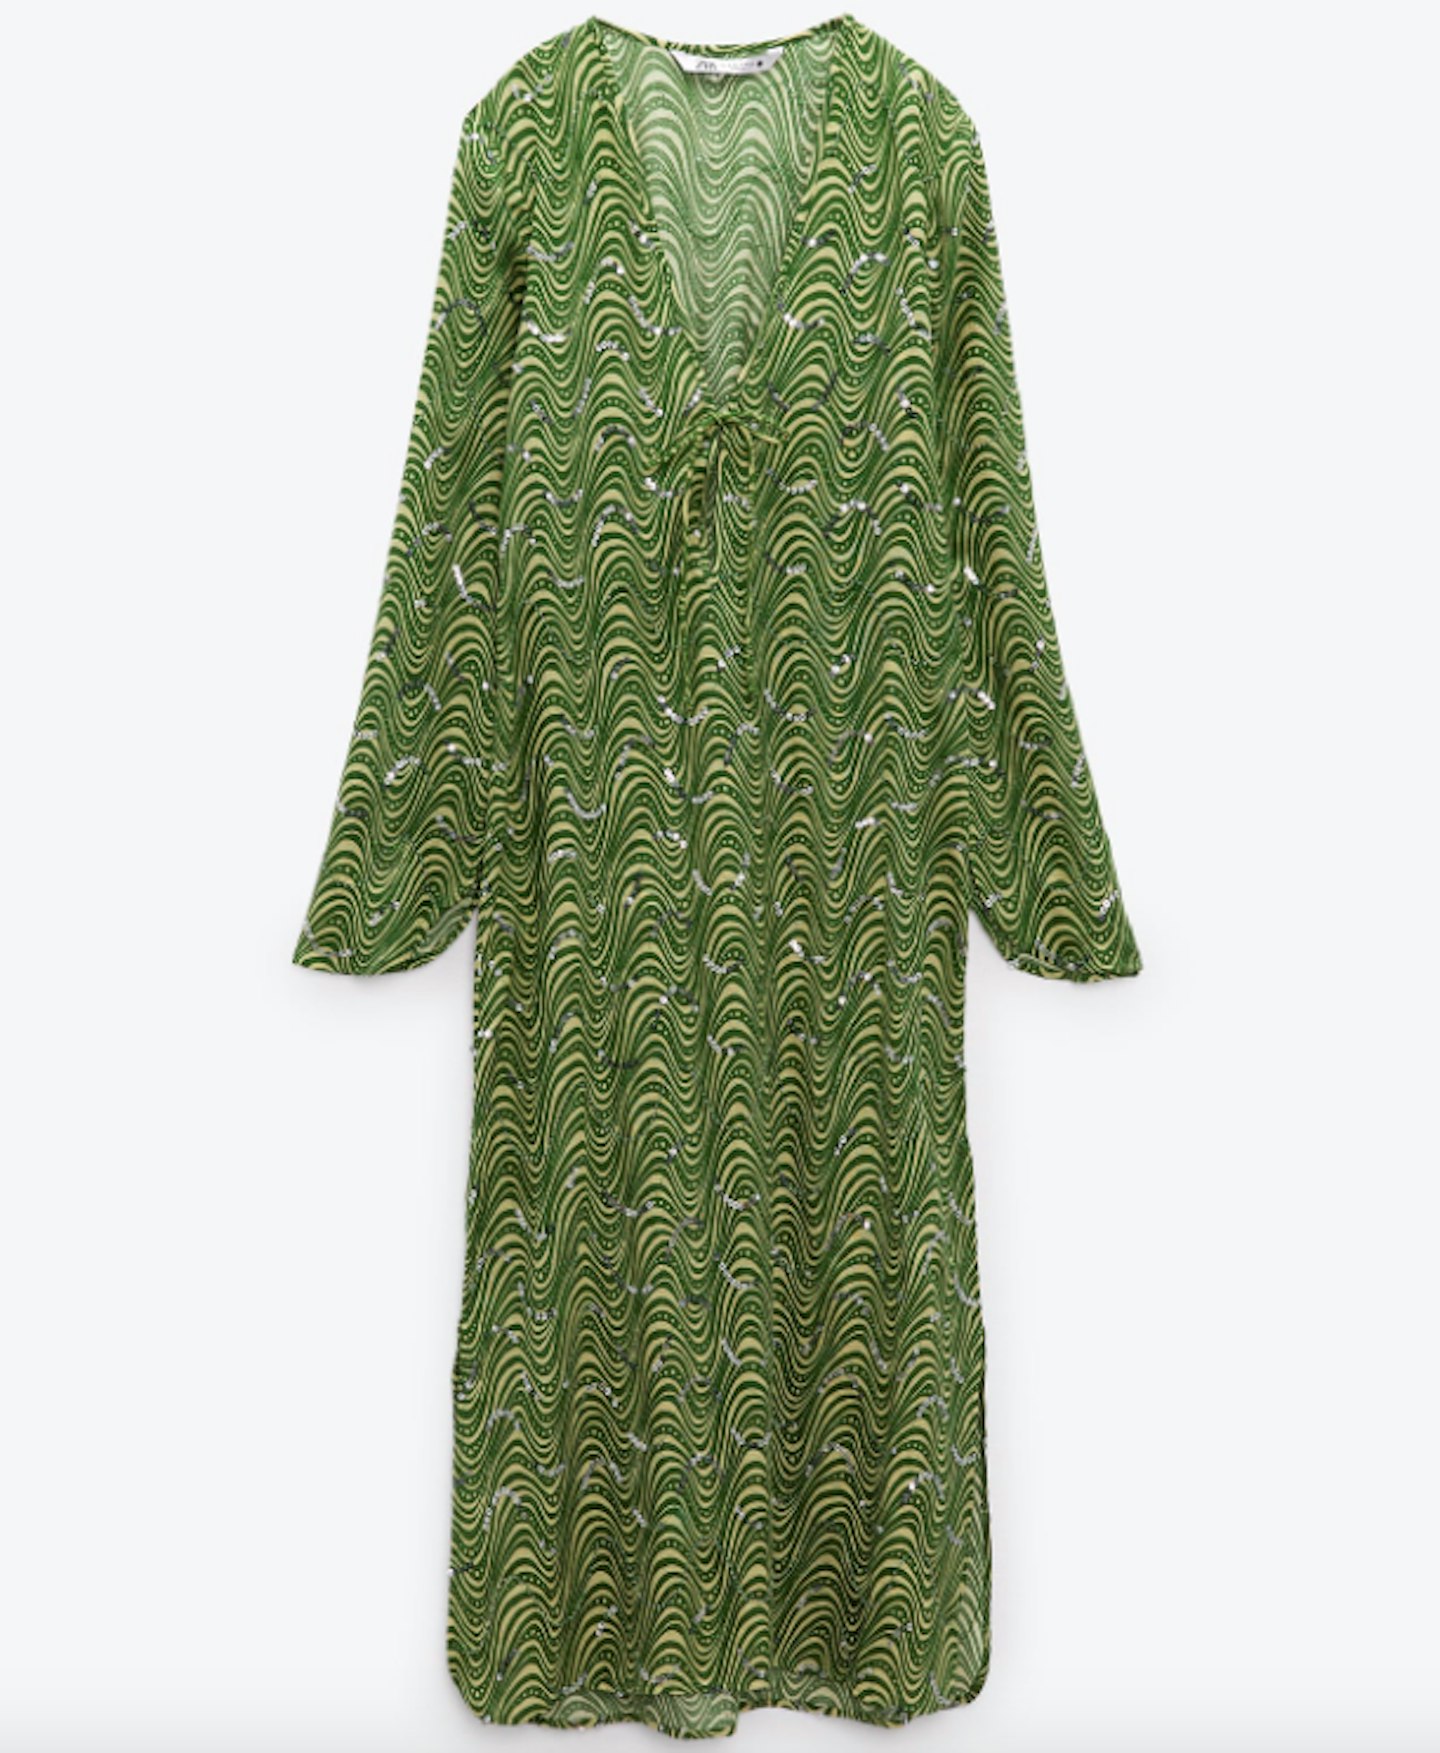 Zara, Limited Edition Printed Dress